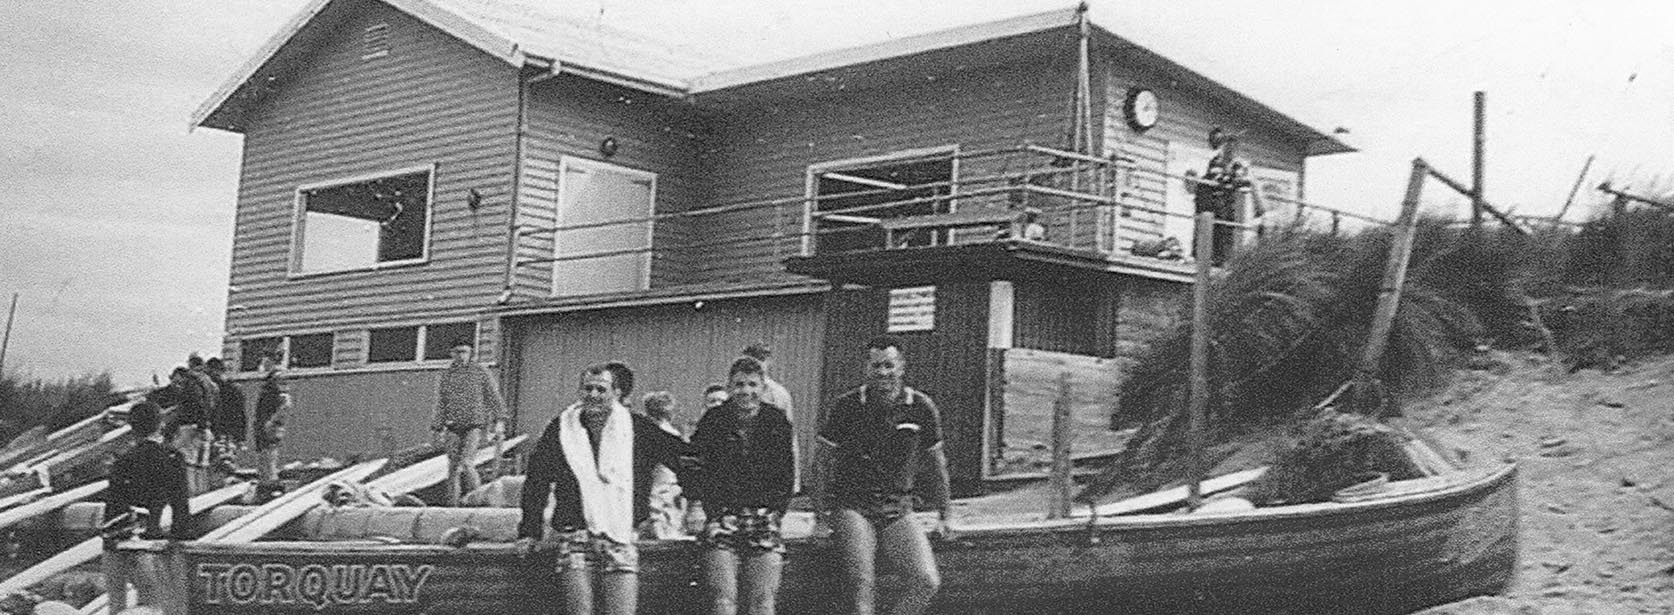 First Torquay Surf Life Saving Club House